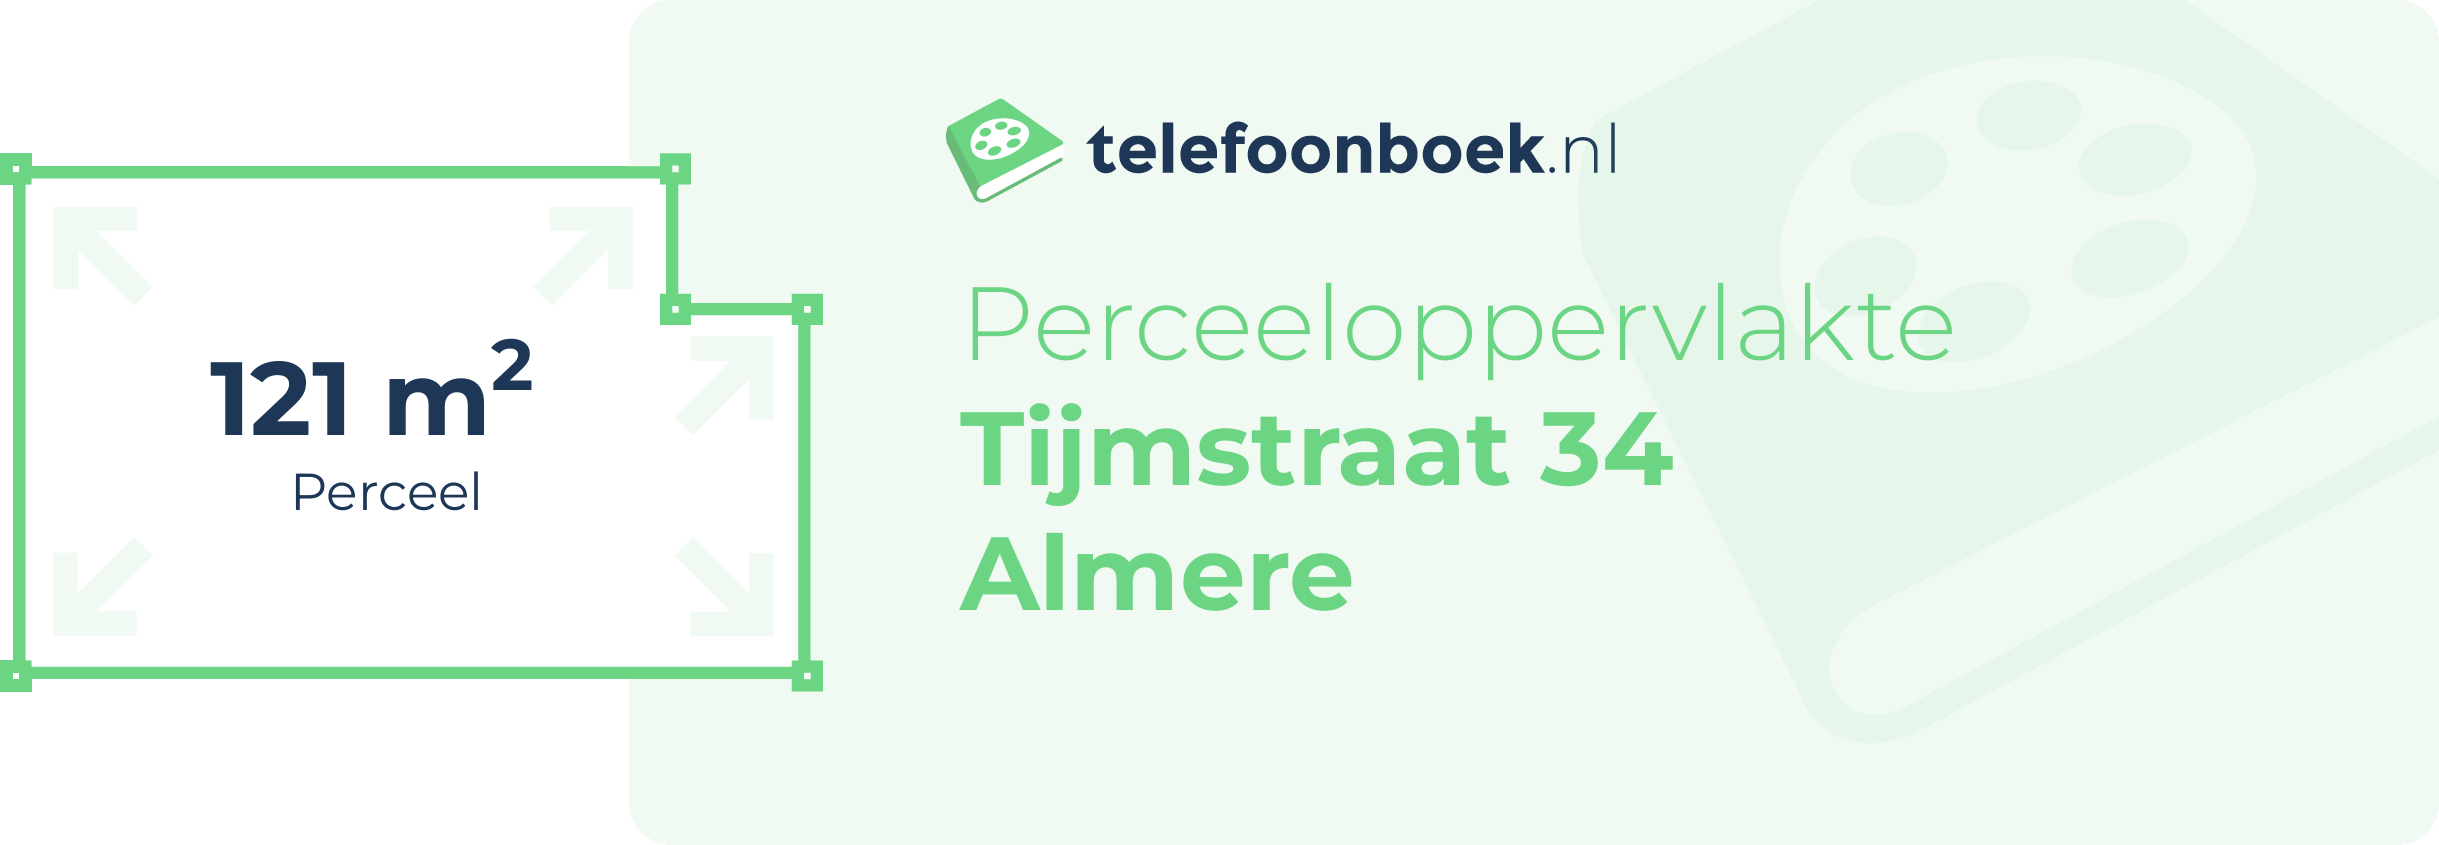 Perceeloppervlakte Tijmstraat 34 Almere